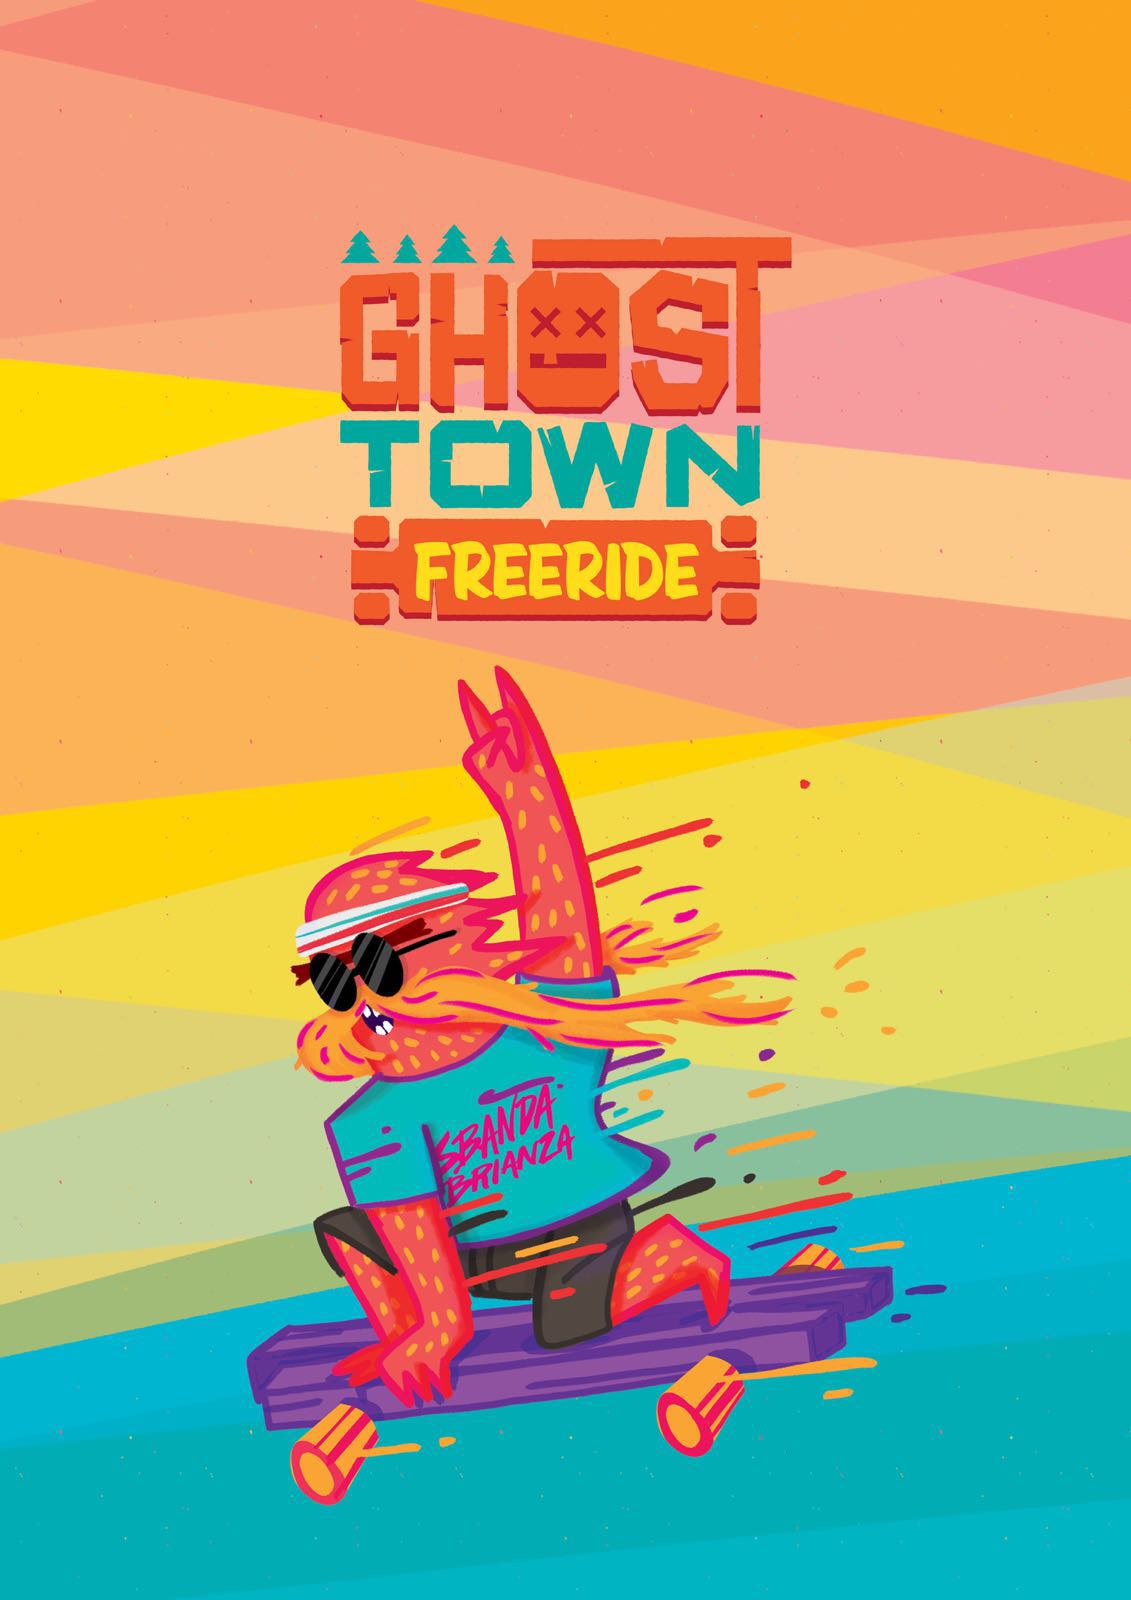 Ghost Town Freeride - Downhill Skate